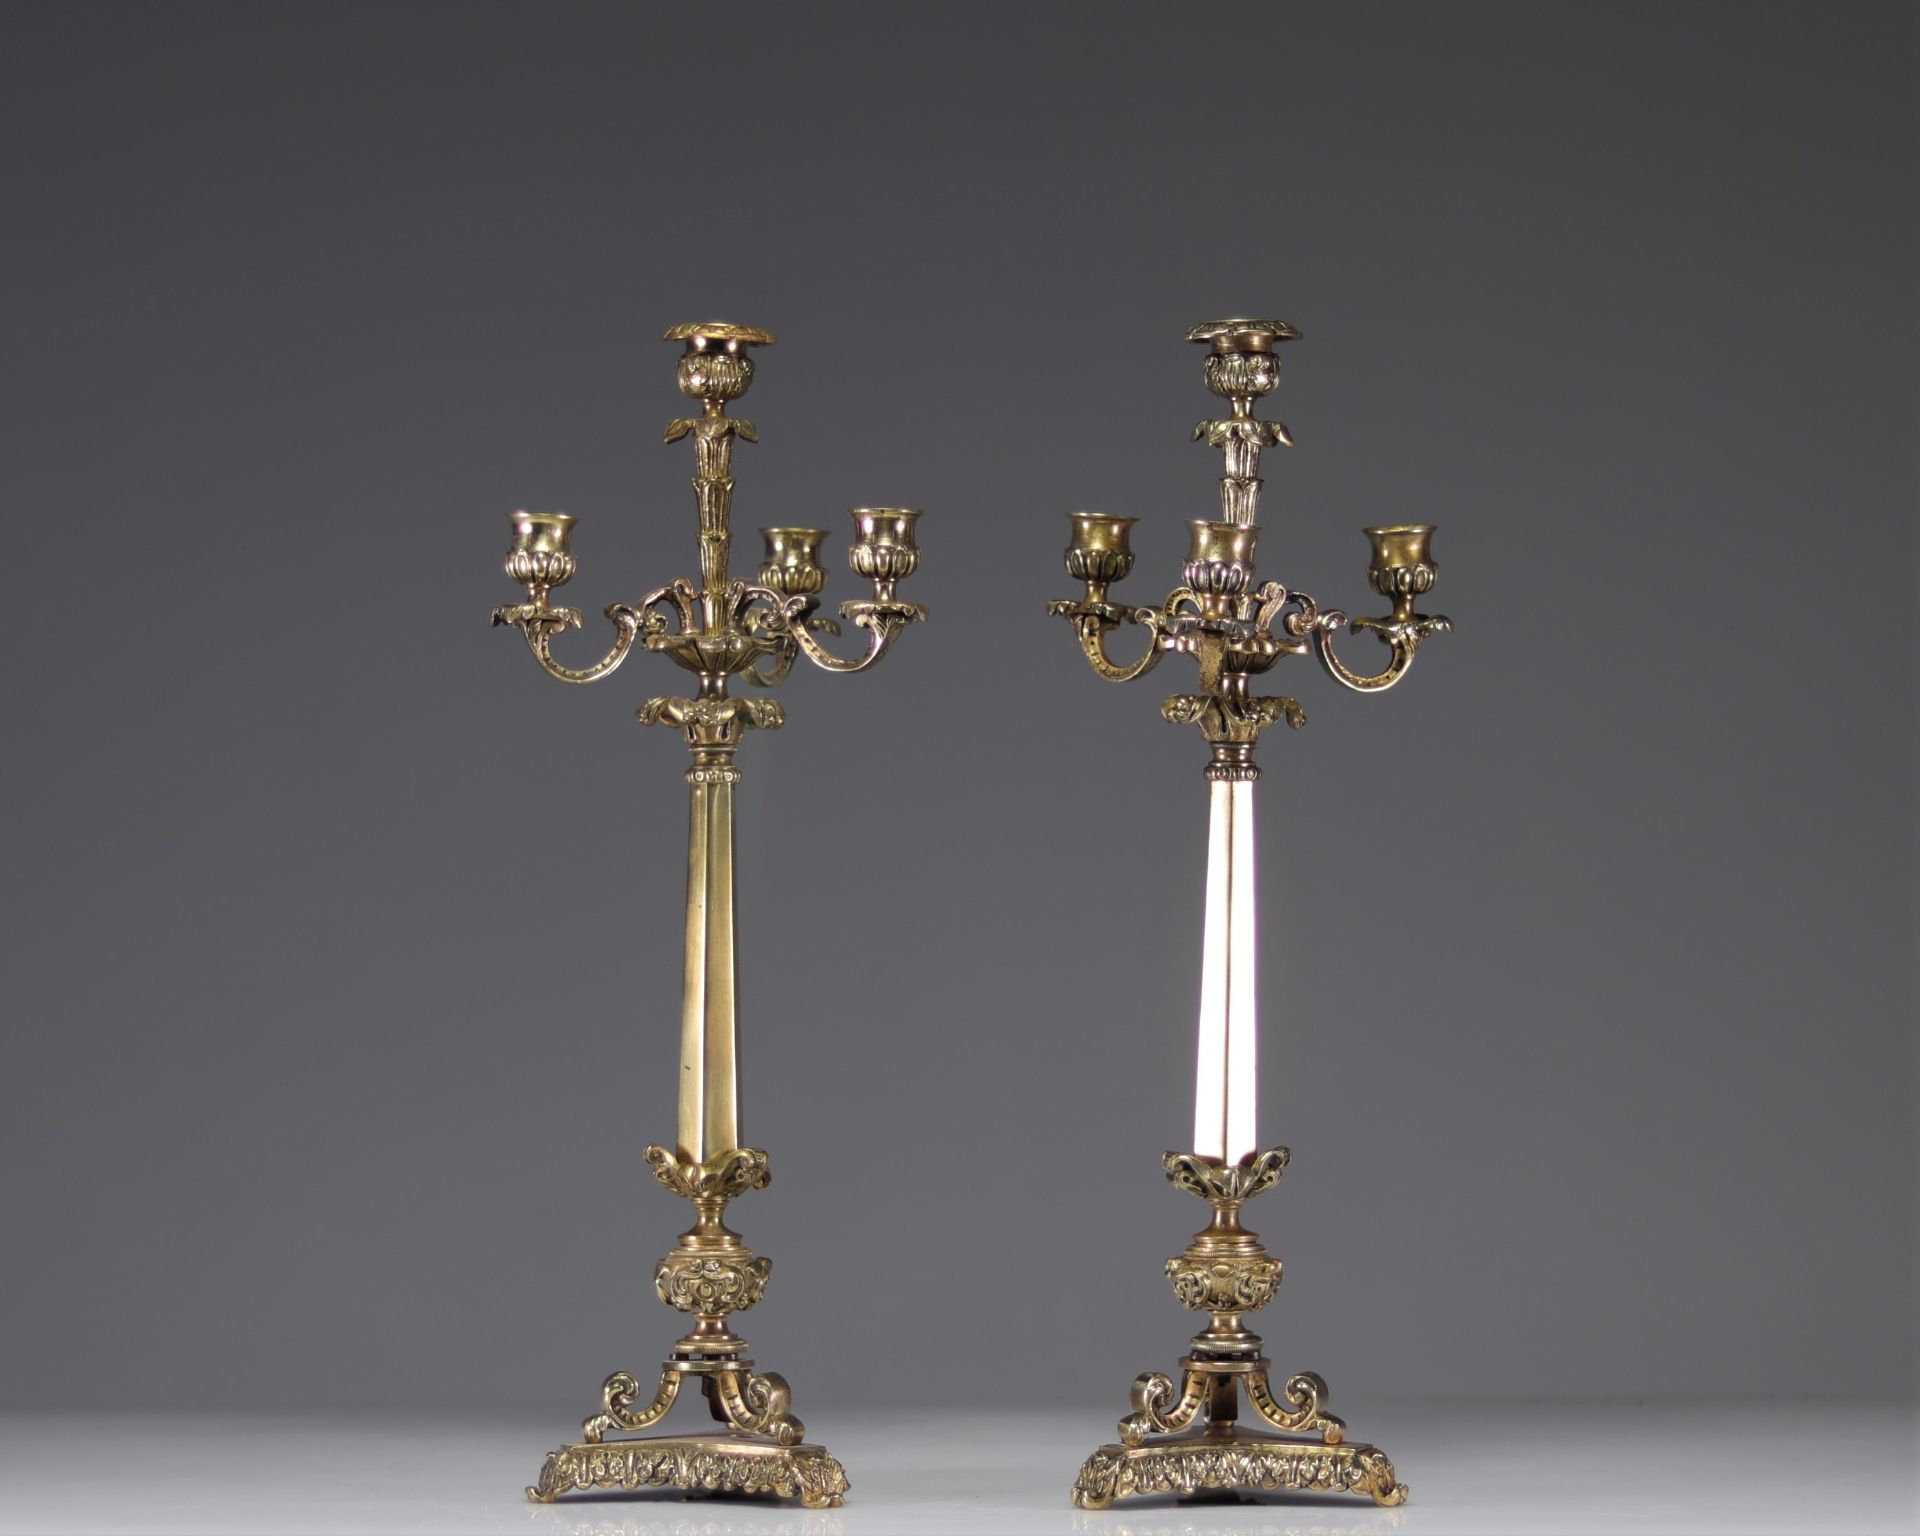 19th century pair of bronze candelabra - Image 3 of 3